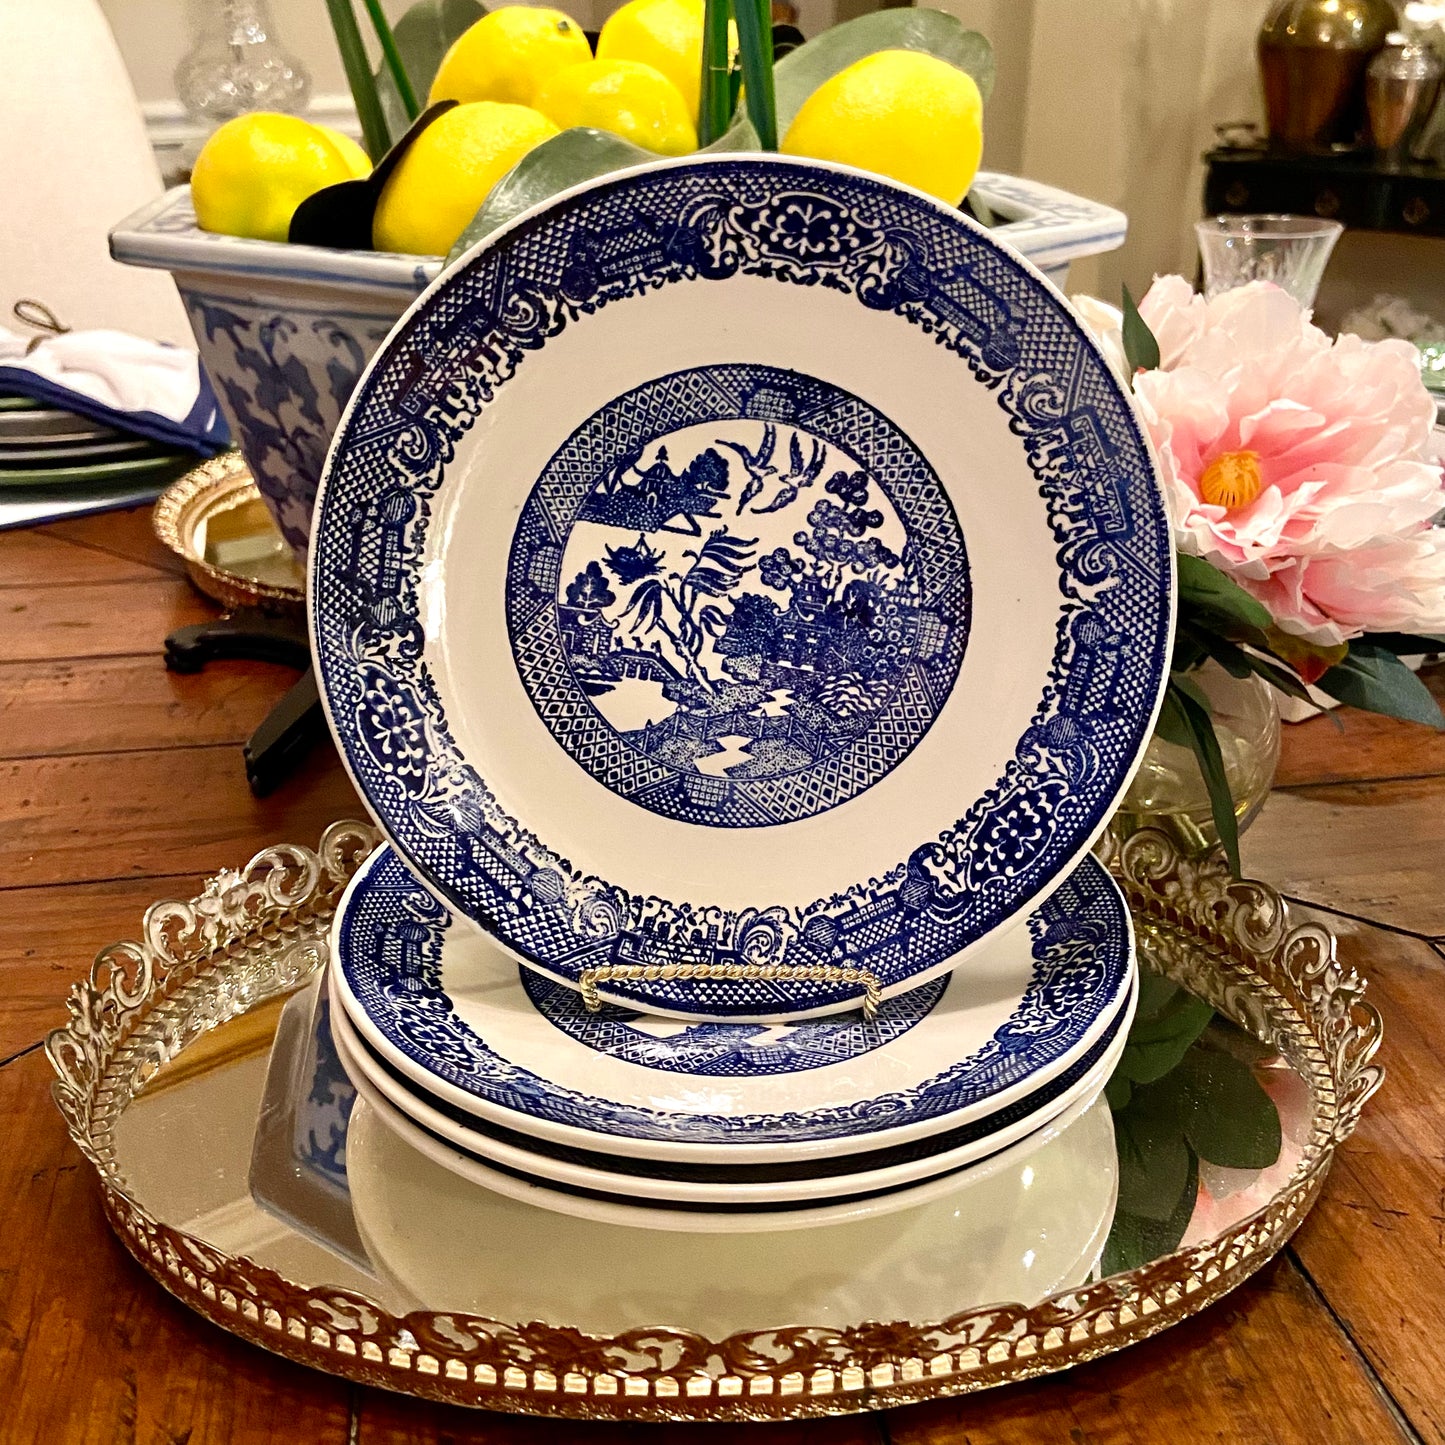 Set of 4 older Cobalt blue and white Blue Willow large dinner plates